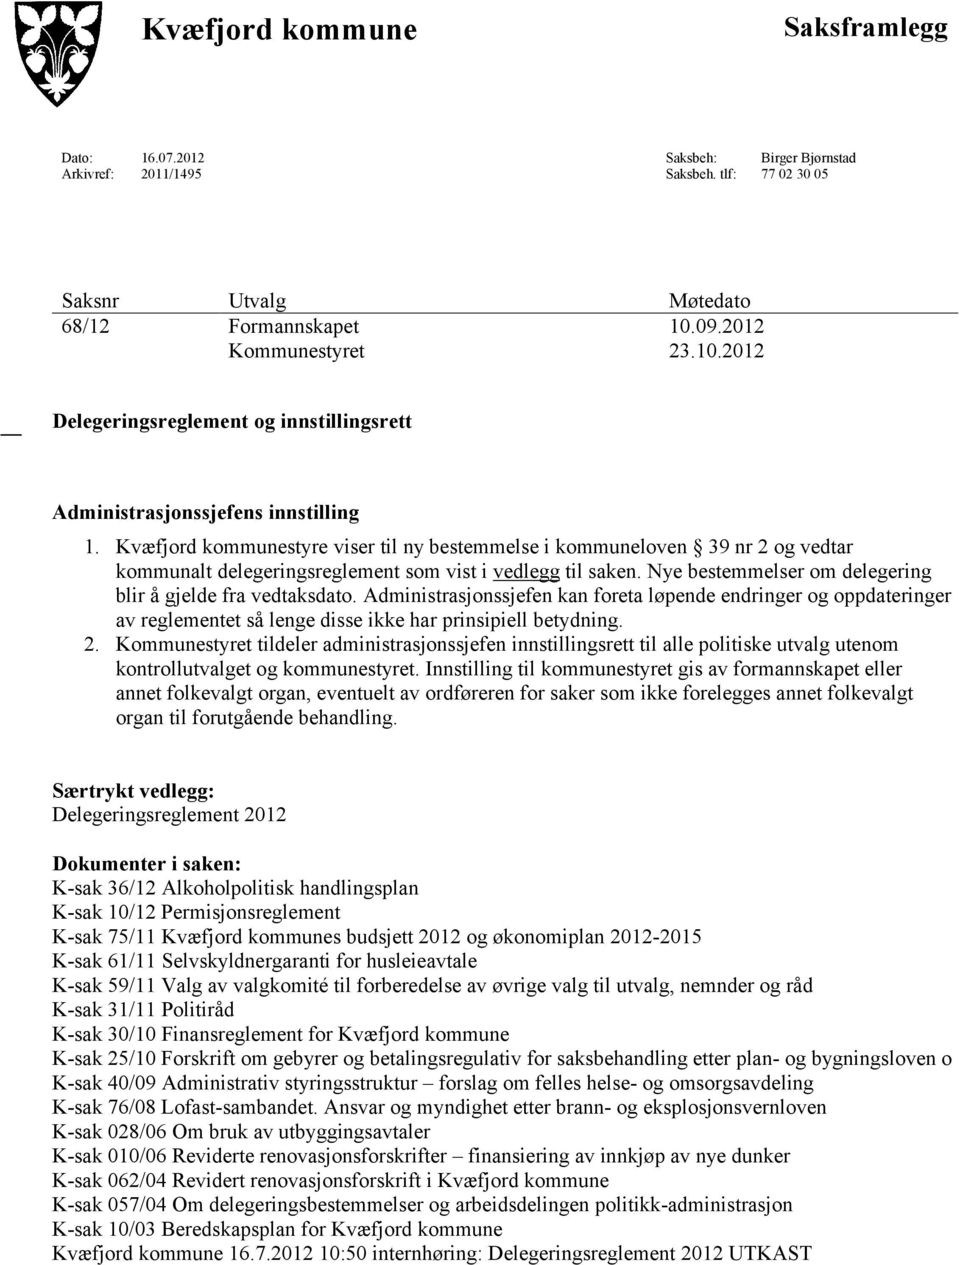 Kvæfjord kommunestyre viser til ny bestemmelse i kommuneloven 39 nr 2 og vedtar kommunalt delegeringsreglement som vist i vedlegg til saken.